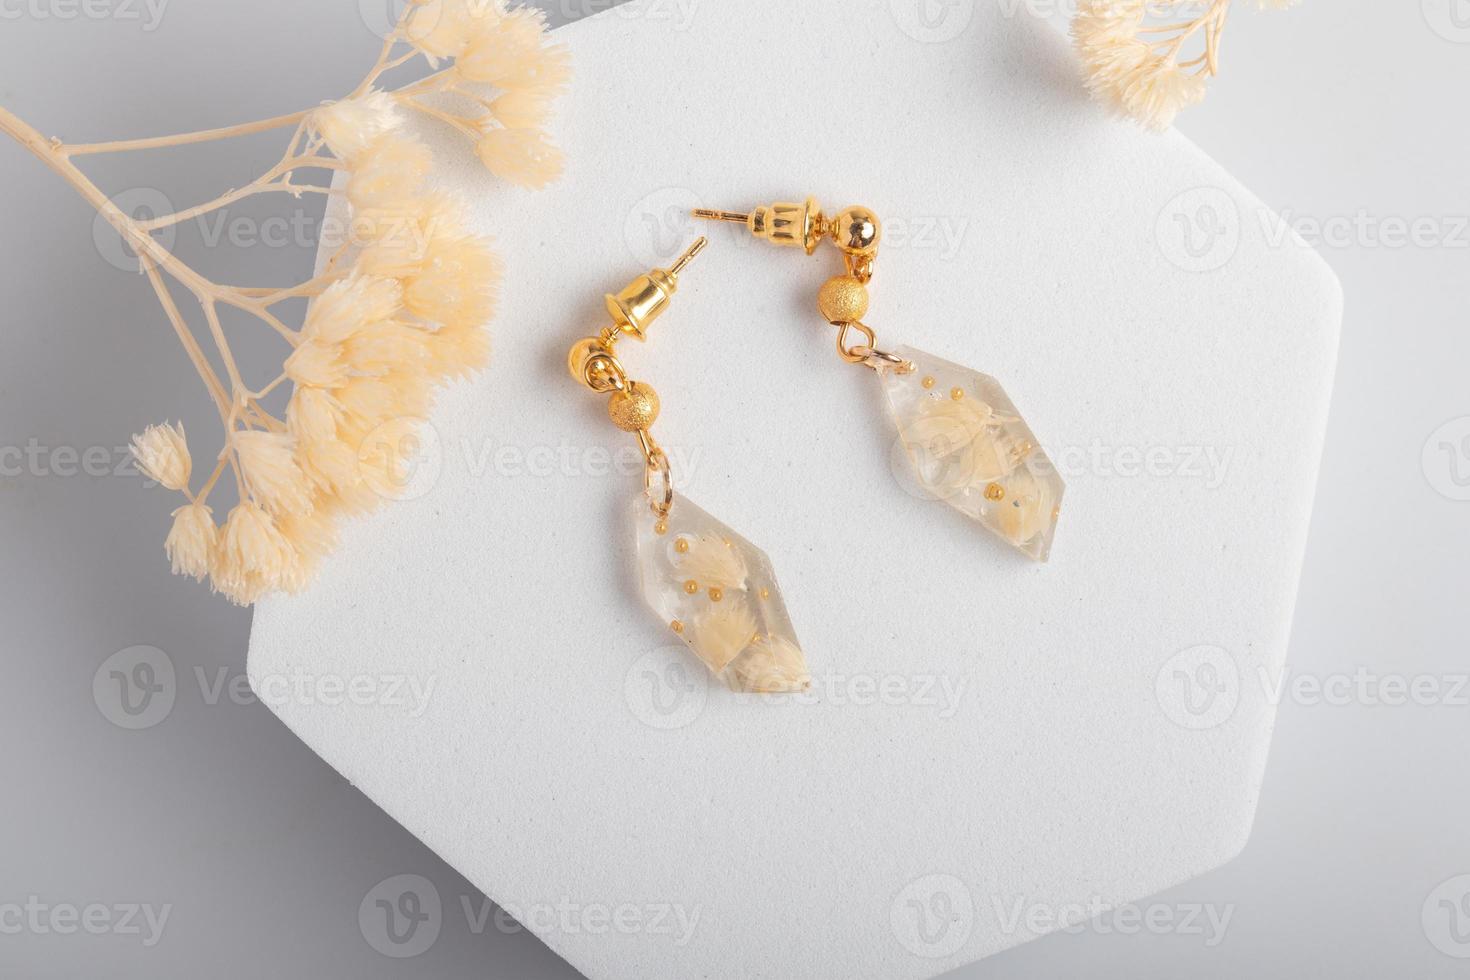 Resin earrings handmade jewelry for women's fashion photo